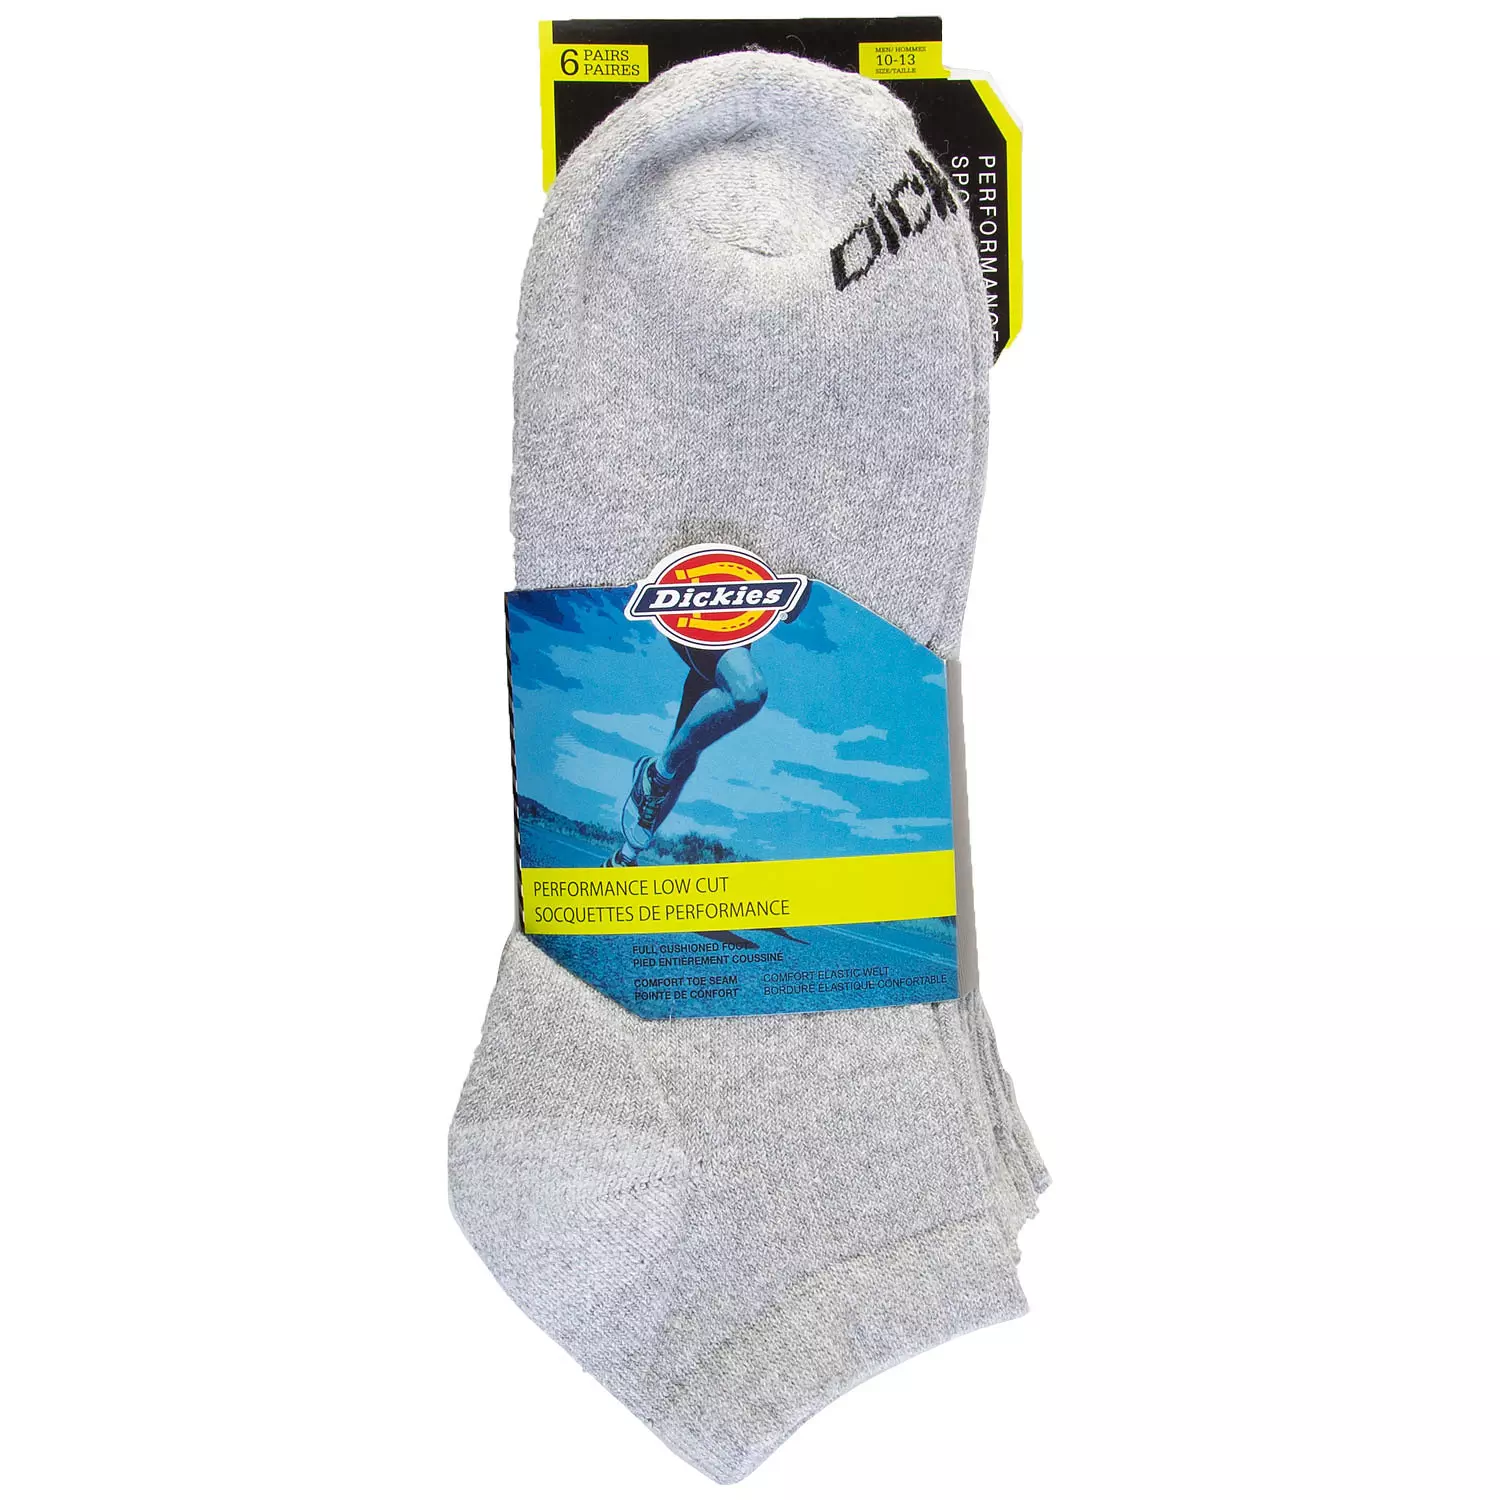 Dickies - Performance low cut socks, 6 pairs, grey